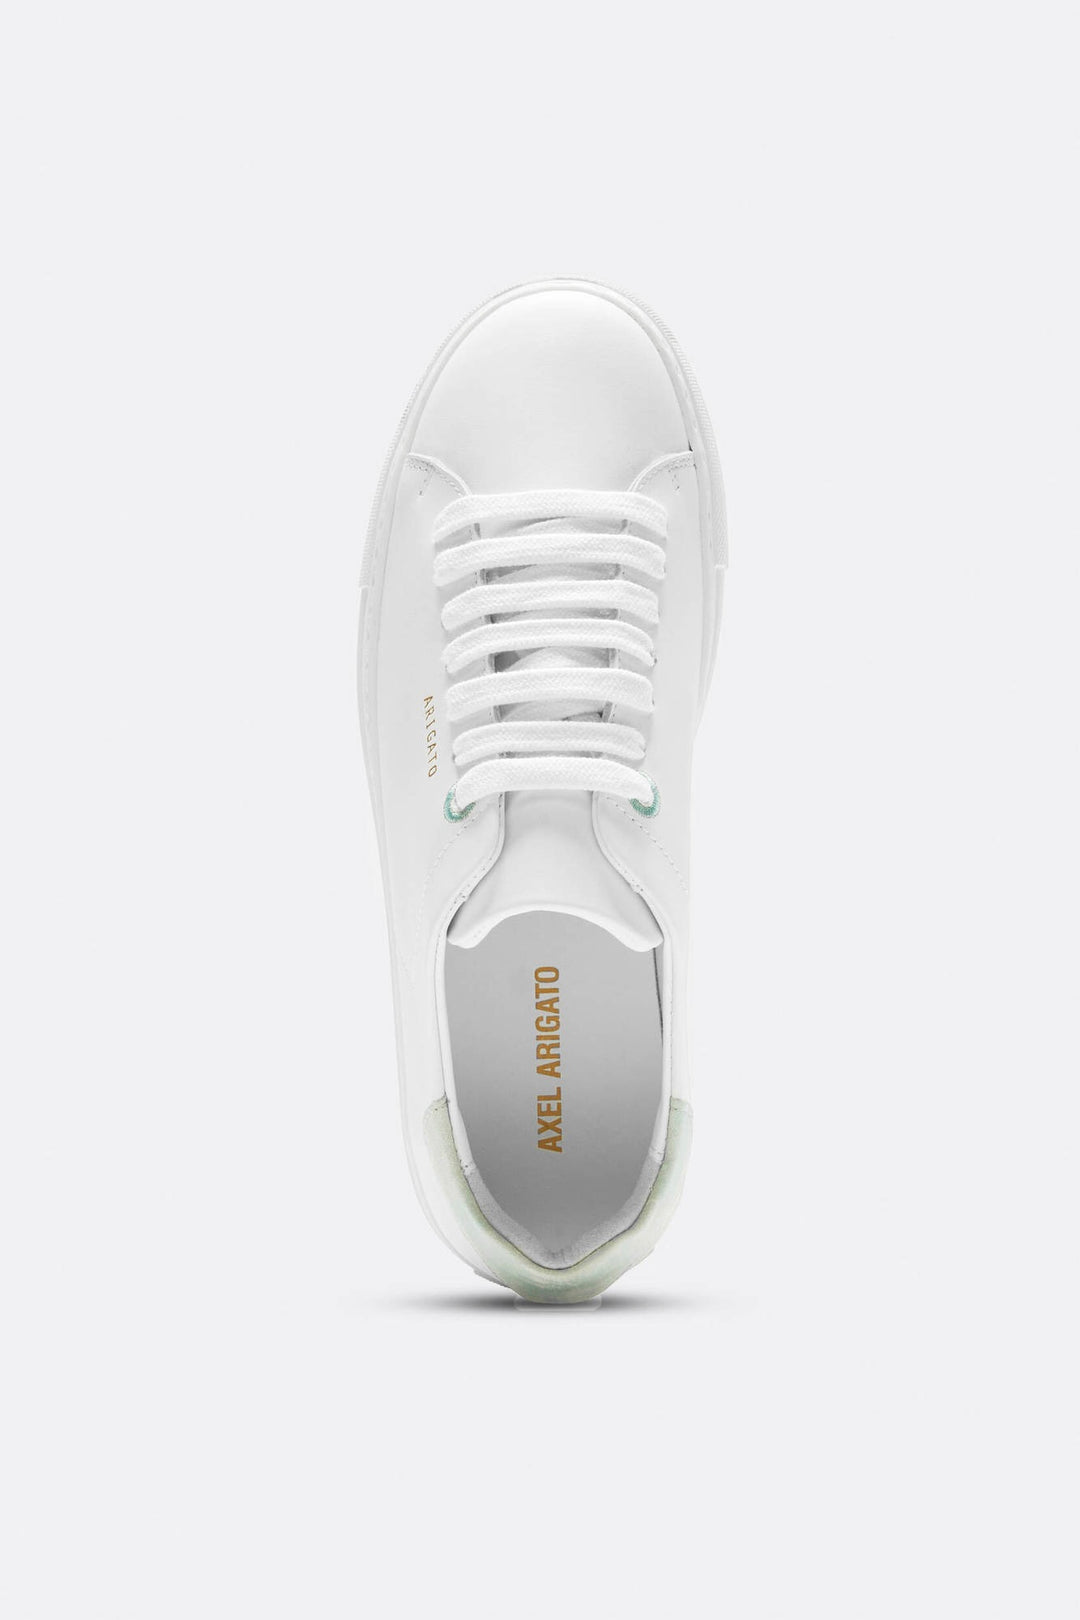 Clean 90 Sneaker White/Mint